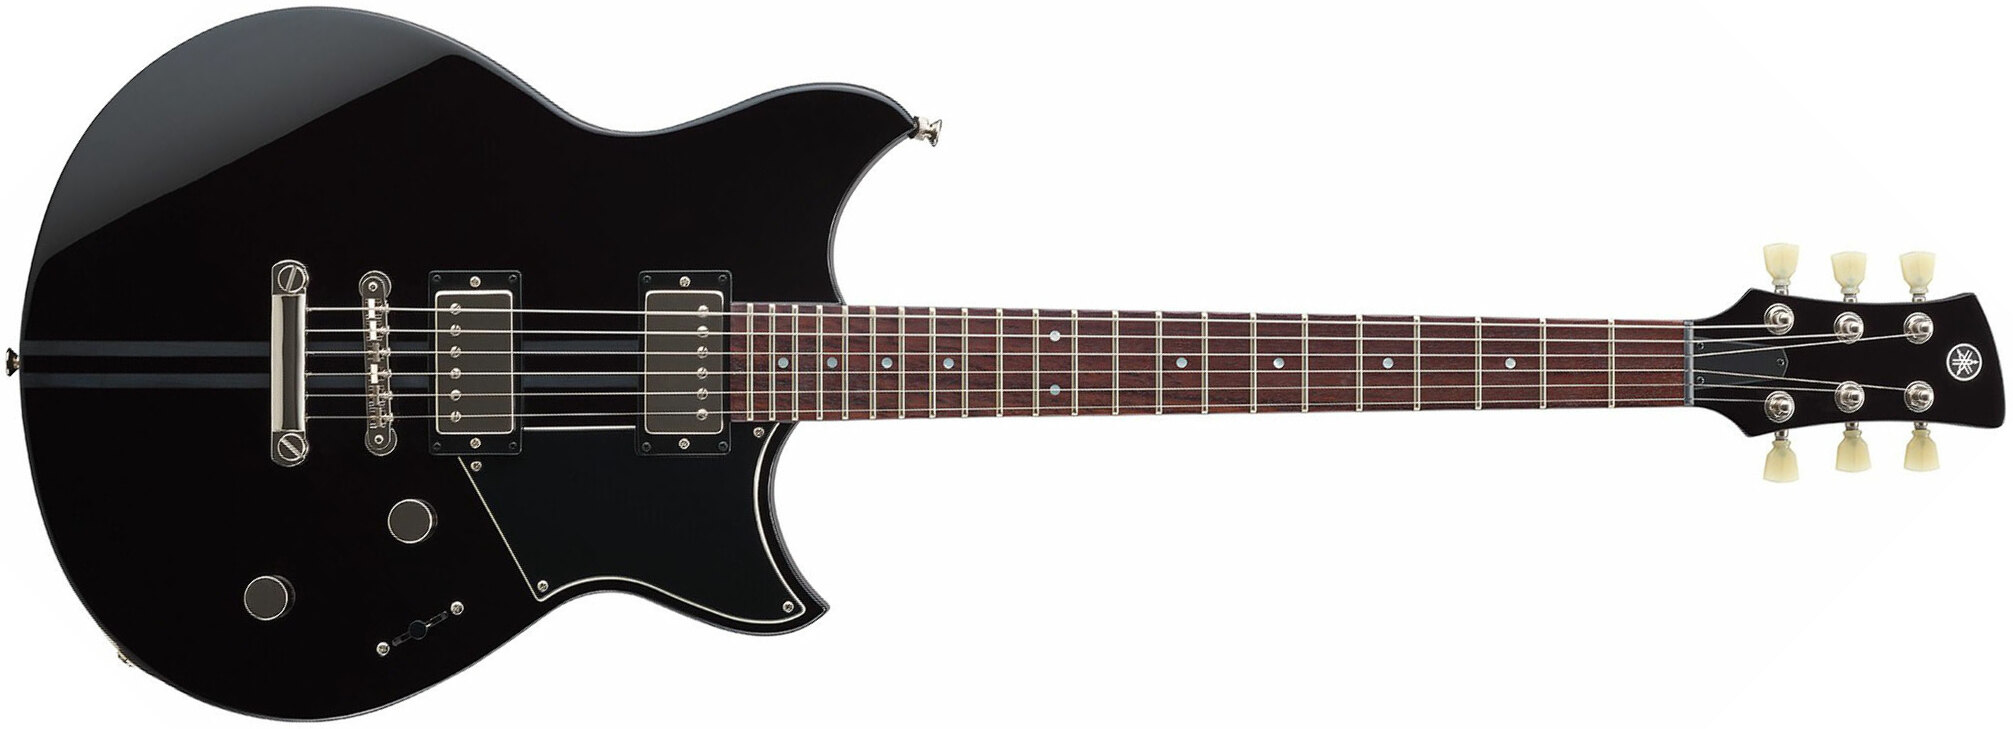 Yamaha Revstar Element RSE20 - black black Double cut electric guitar